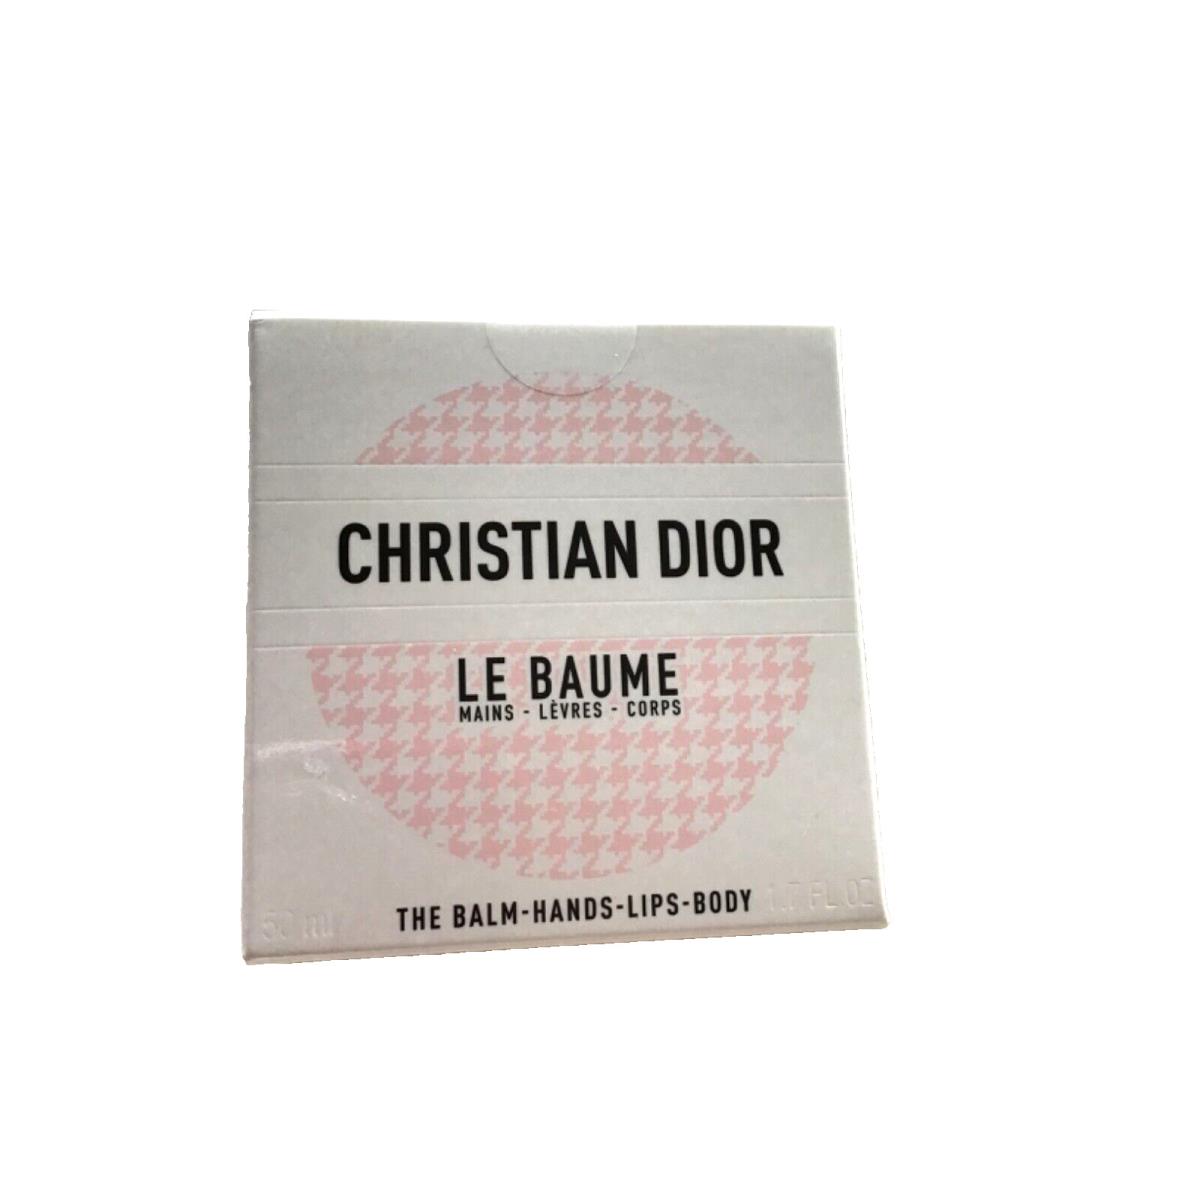 Dior Le Baume Limited Ed. Lips Hands Body 1.7 fl oz Vitamin E Jojoba